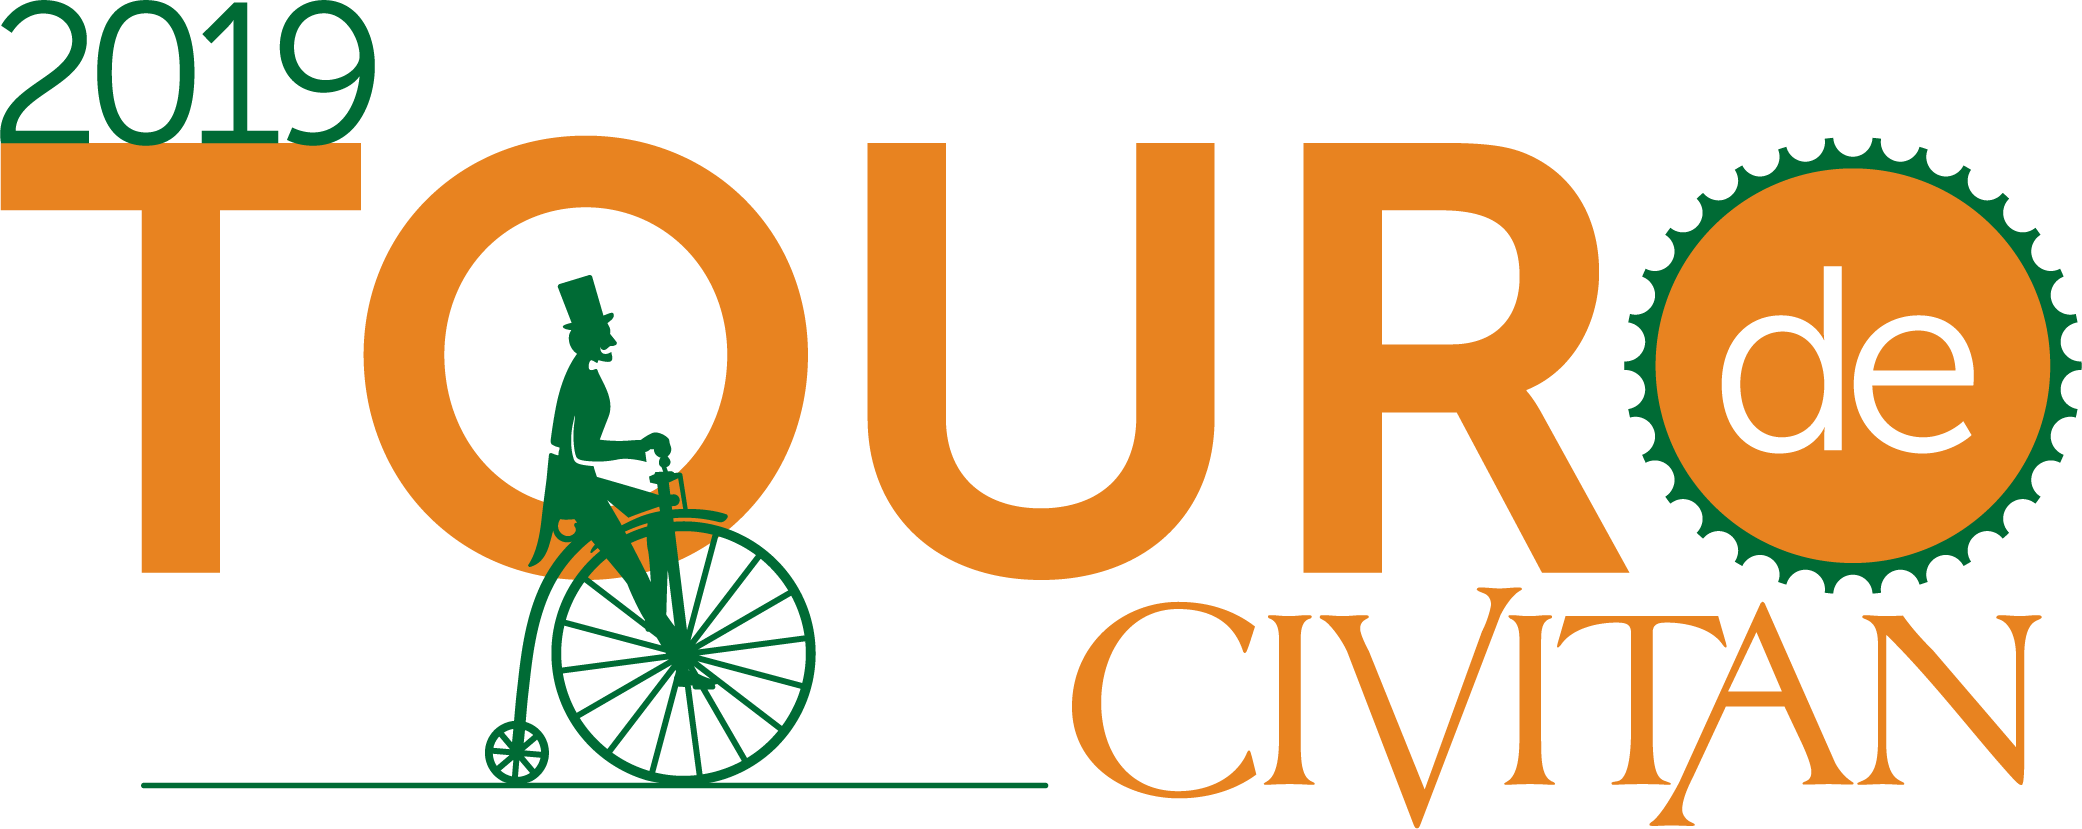 Civitan Logo - Tour de Civitan 2019 – Civitan Foundation